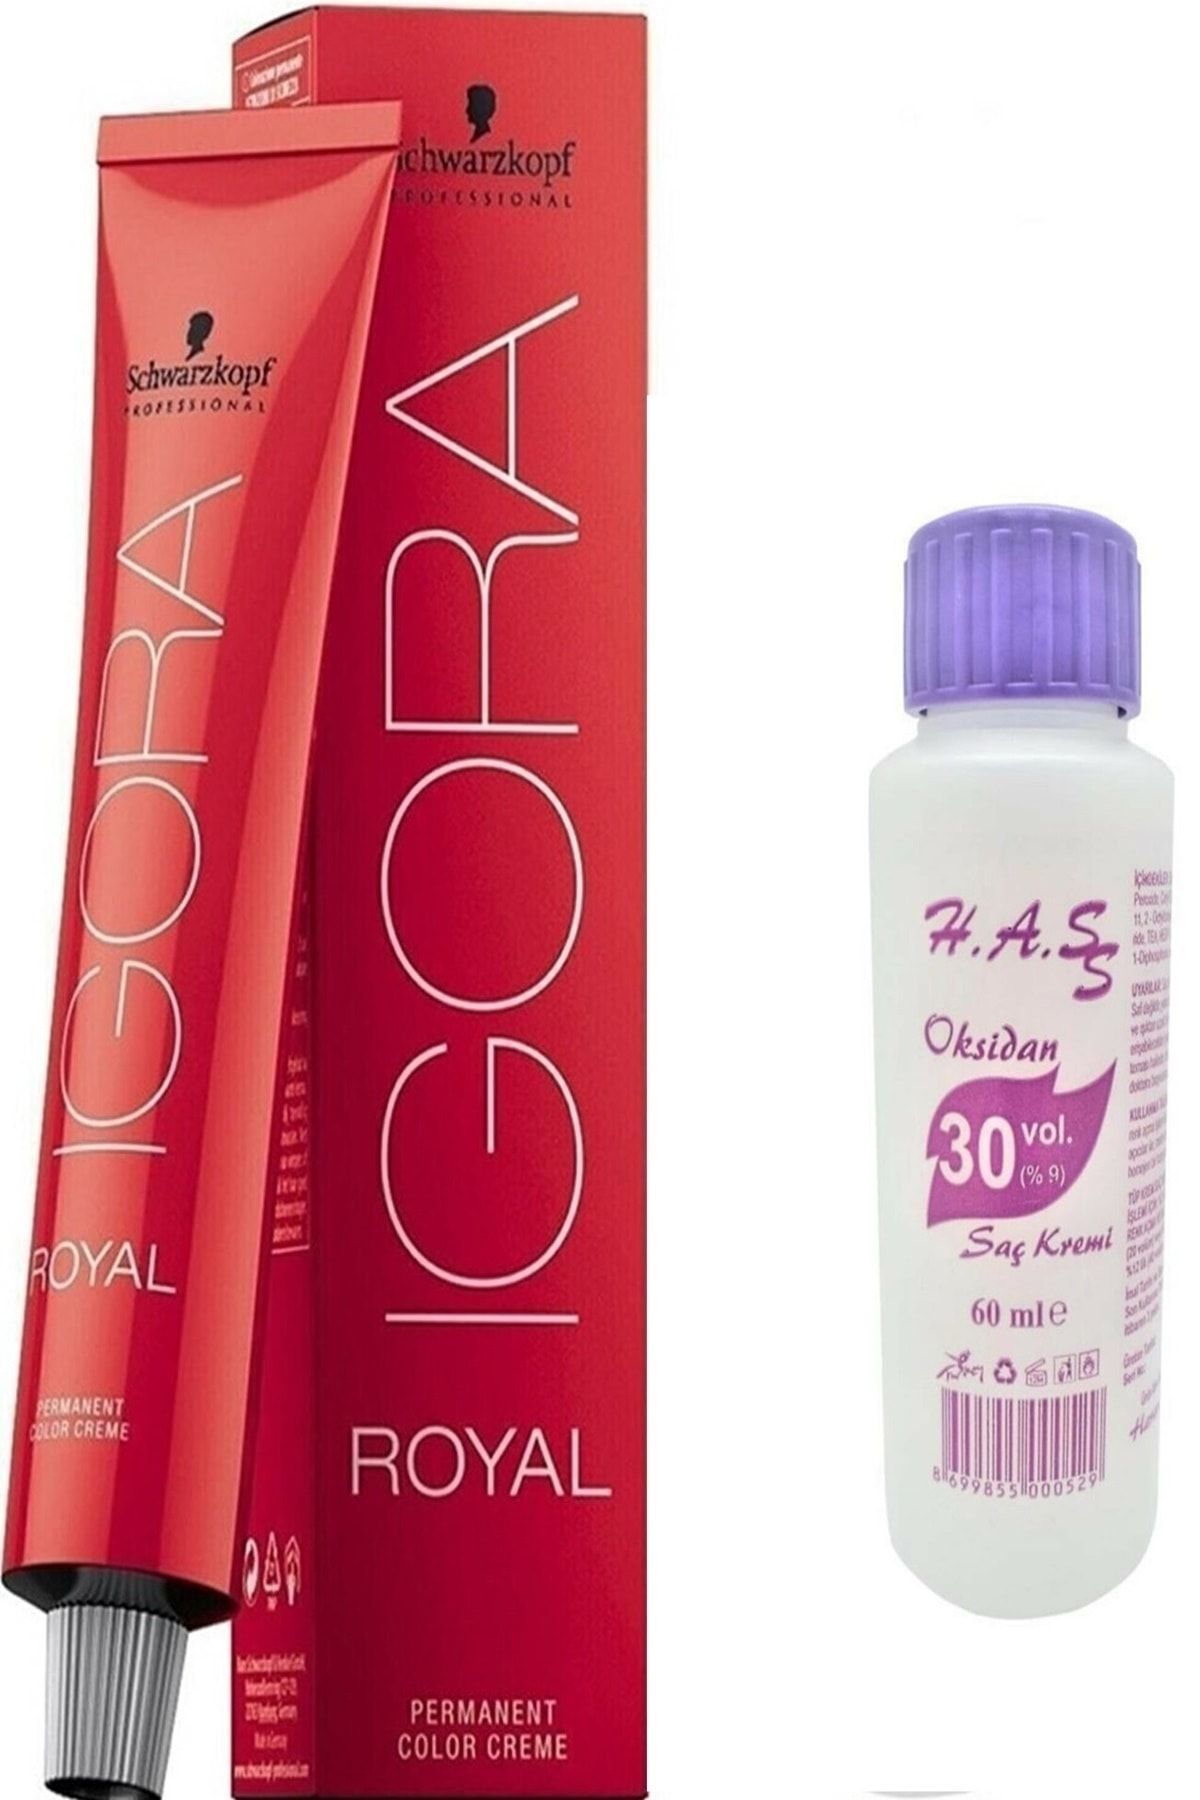 Igora Igora Royal Saç Boyası 9-4 Sarı Bej 60 Ml + Mini Oksidan 30 Volüm